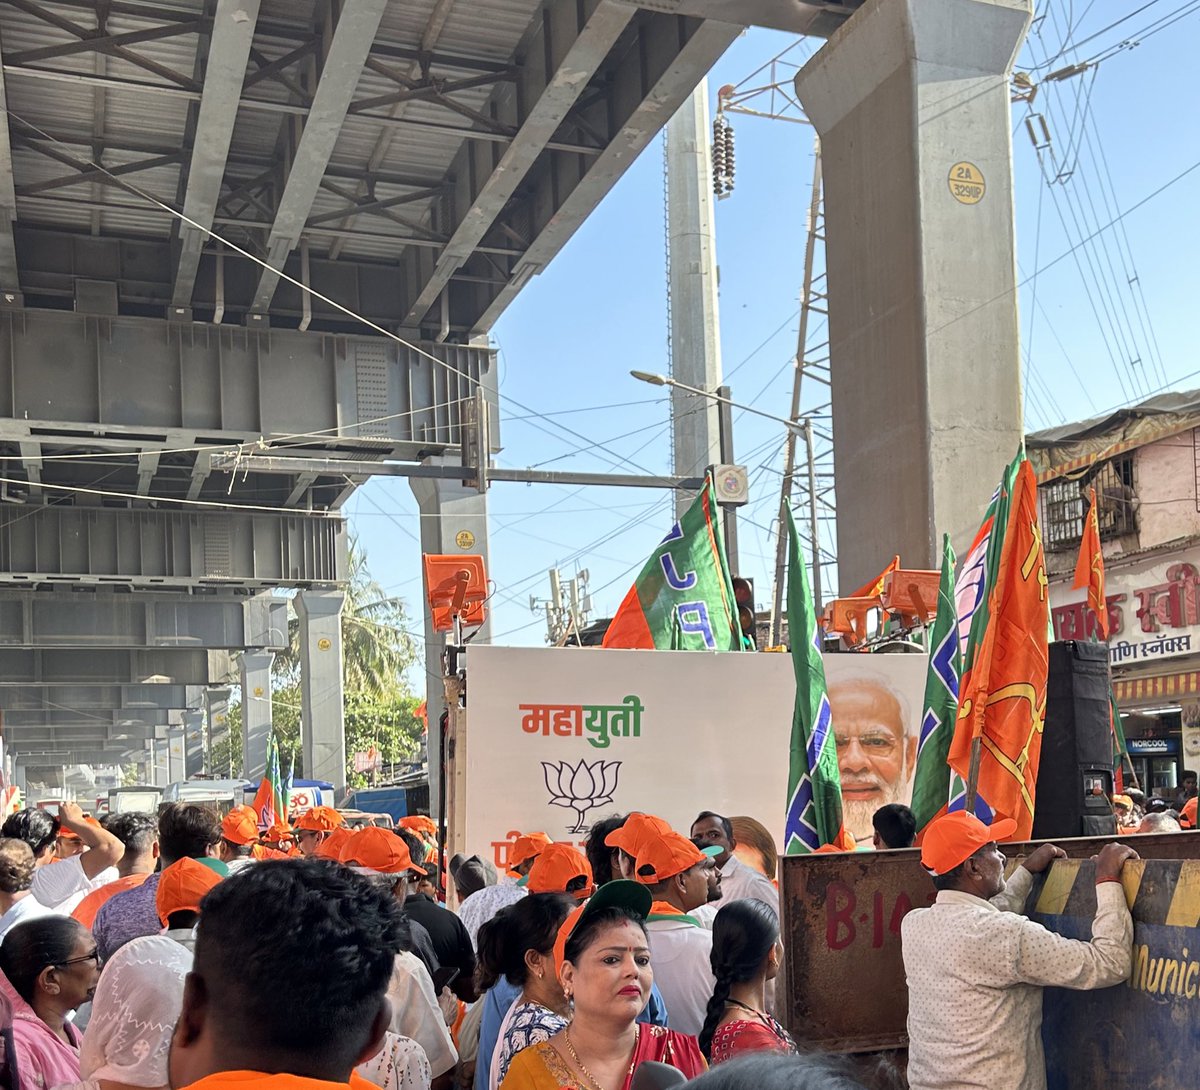 Mahayuti posters in Mumbai have no local leaders, only Modi